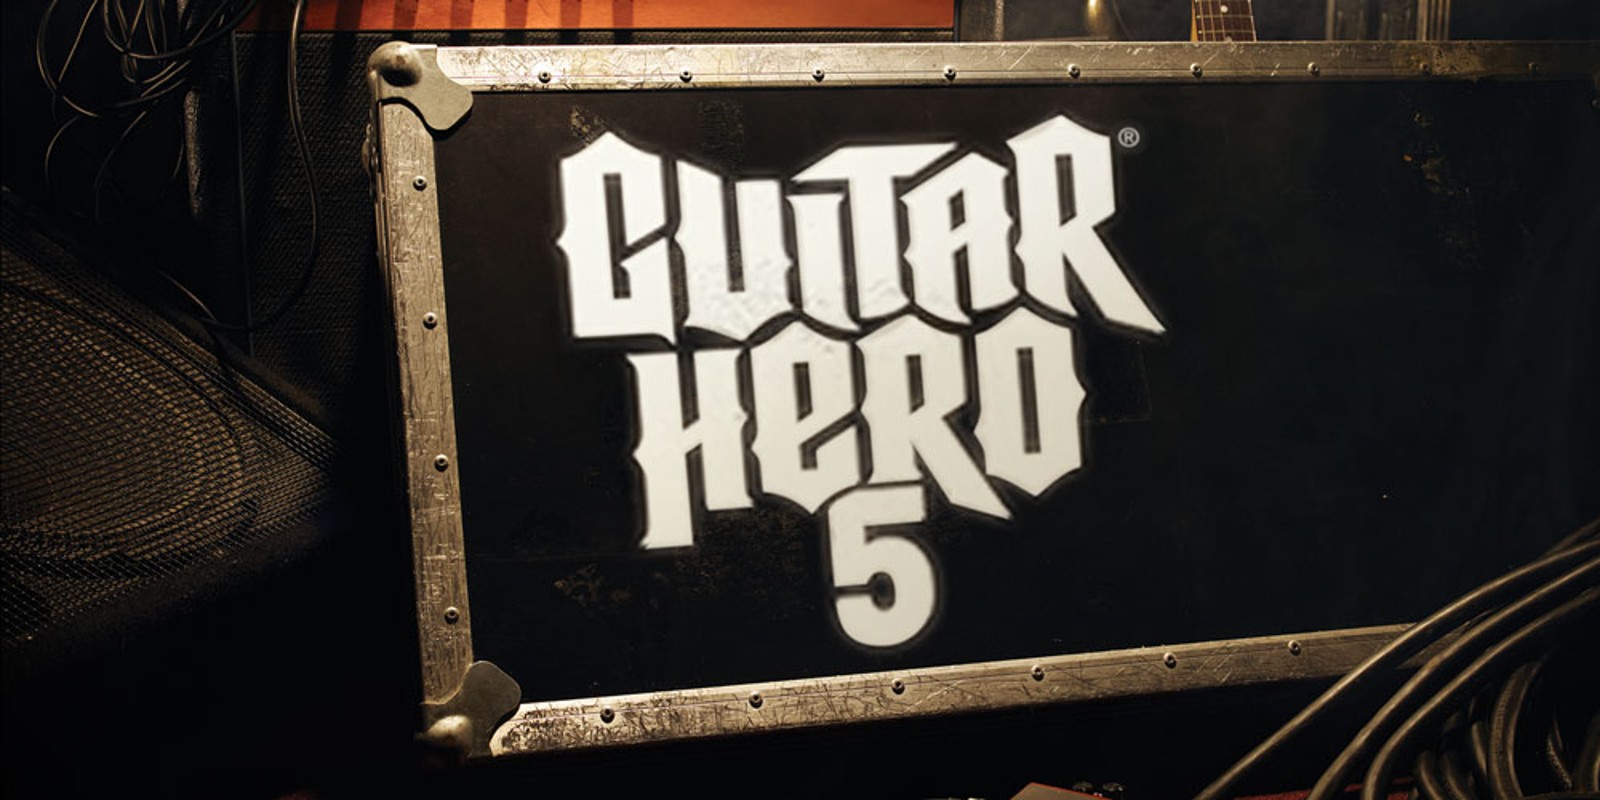 Jeu Guitar Hero 5 + Micro + Batterie + Guitare [ Wii ] 